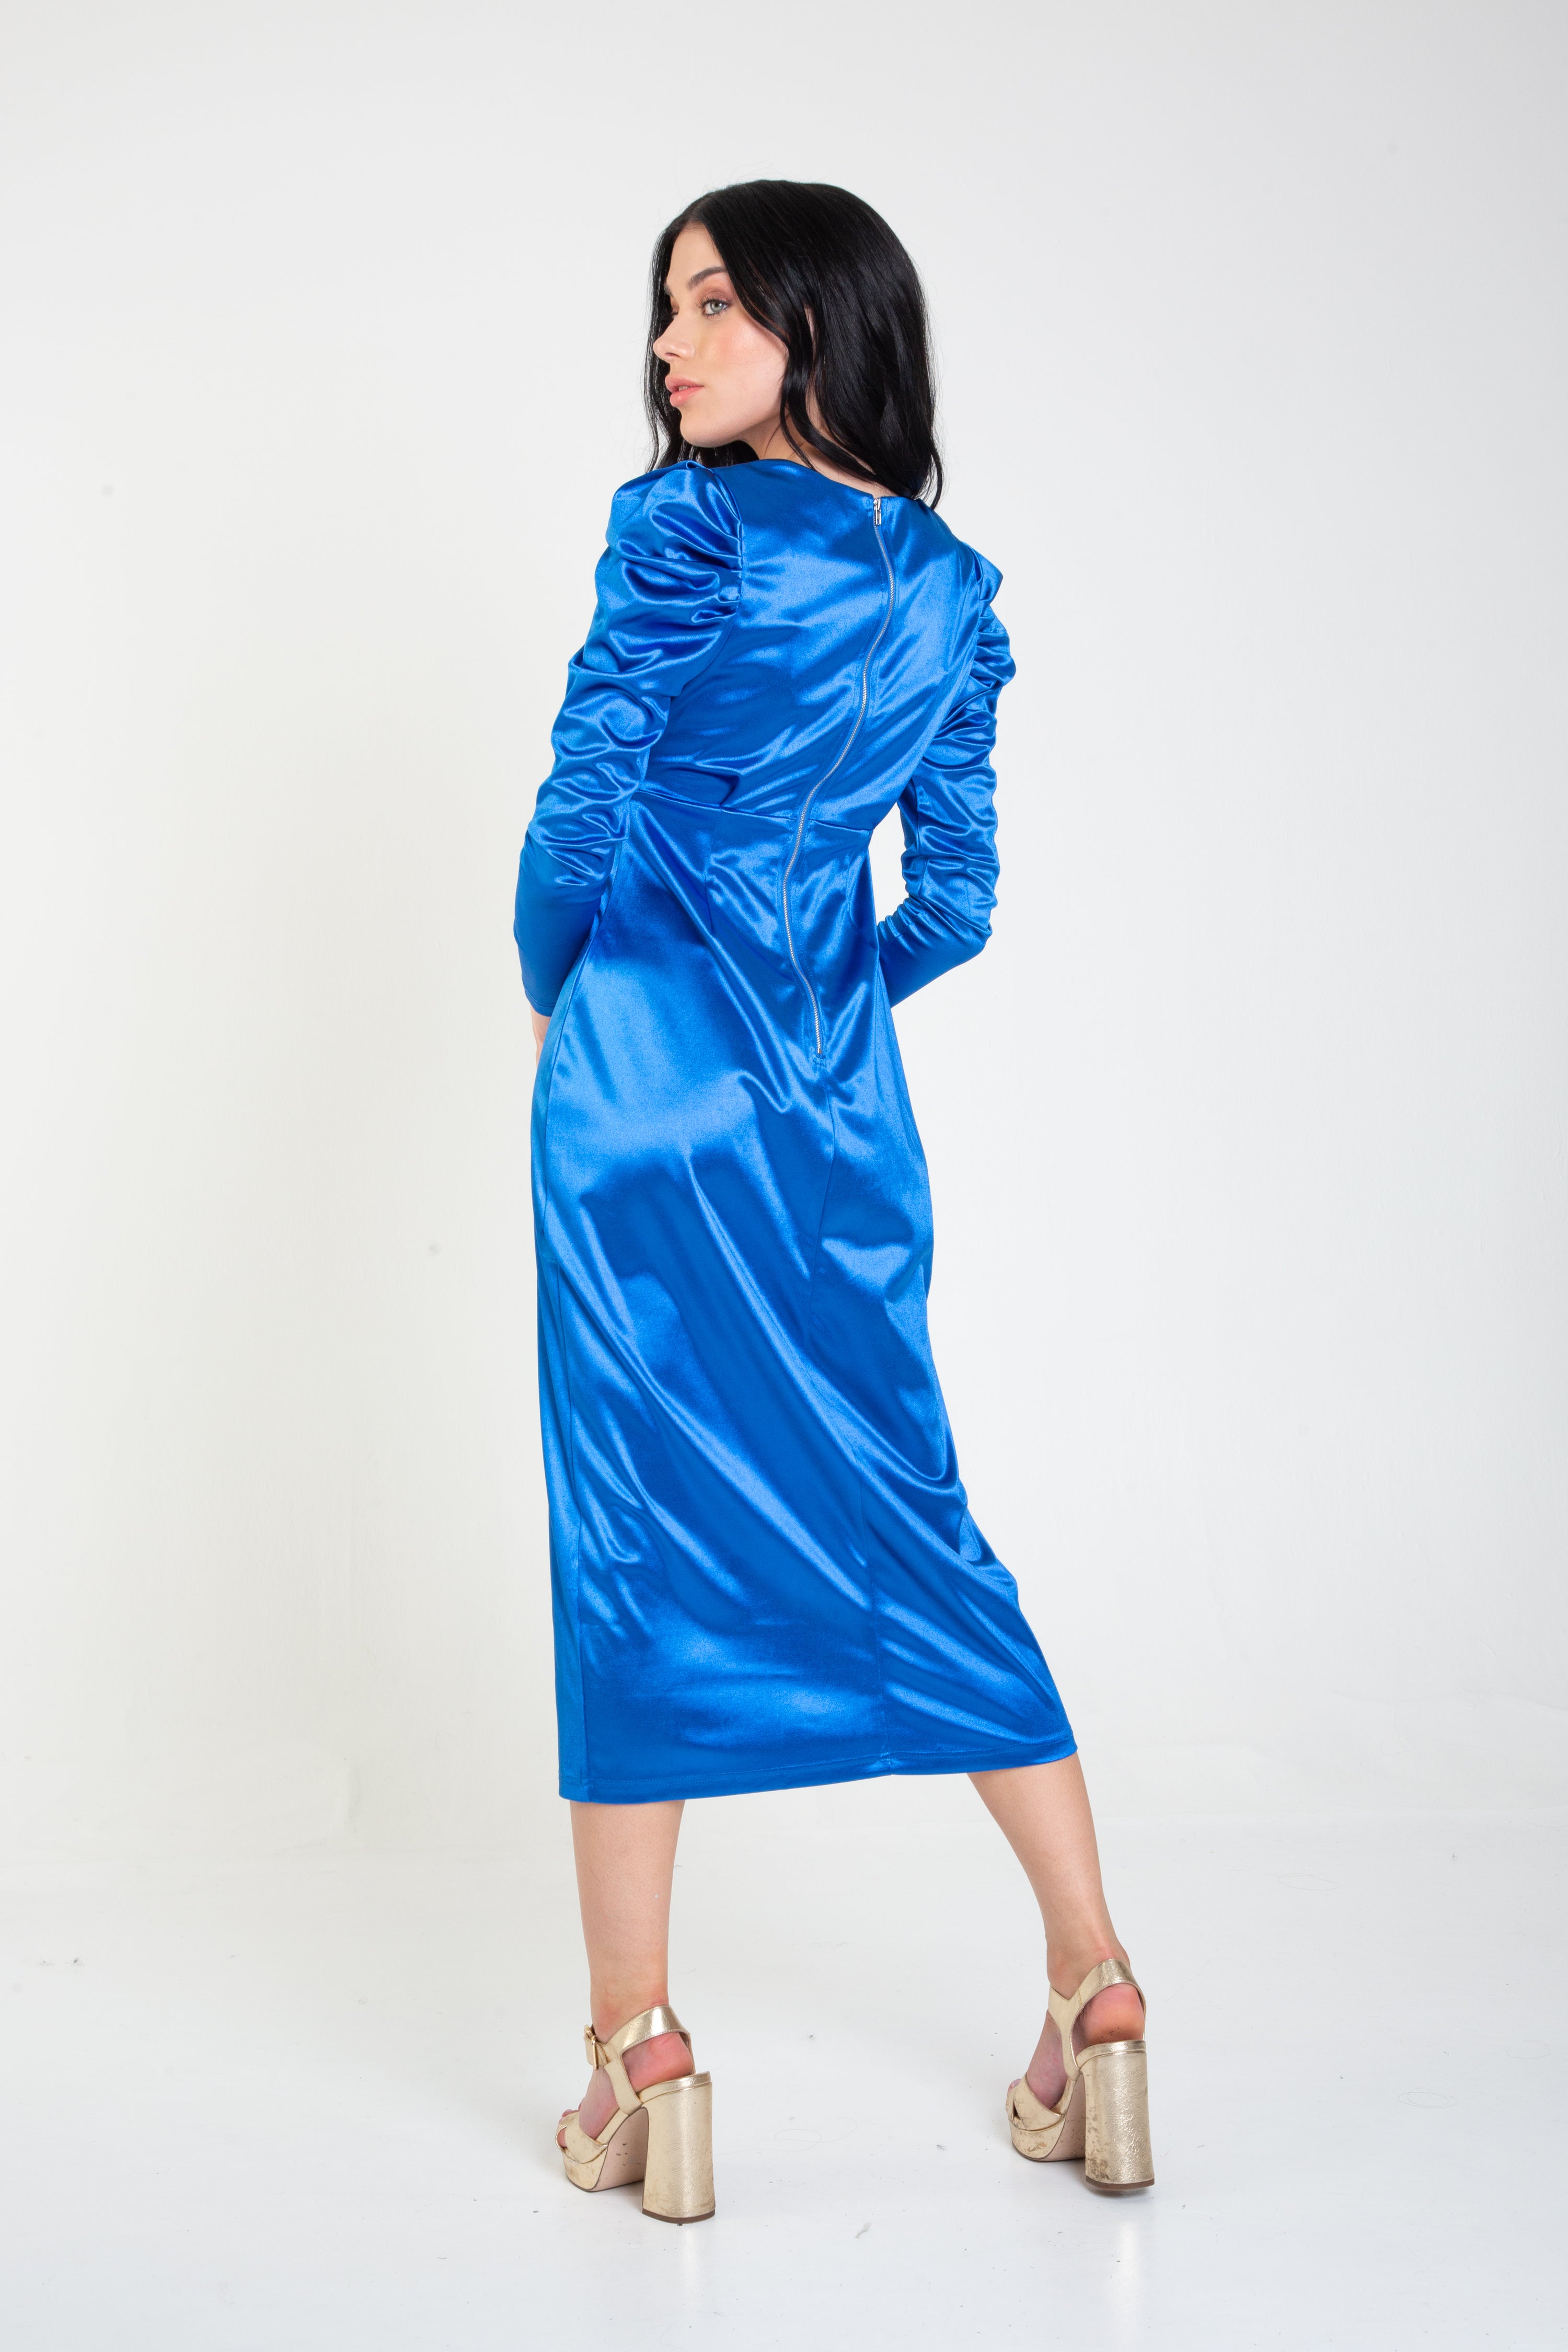 Cobalt Blue V Neck Structured Jersey Midaxi Dress